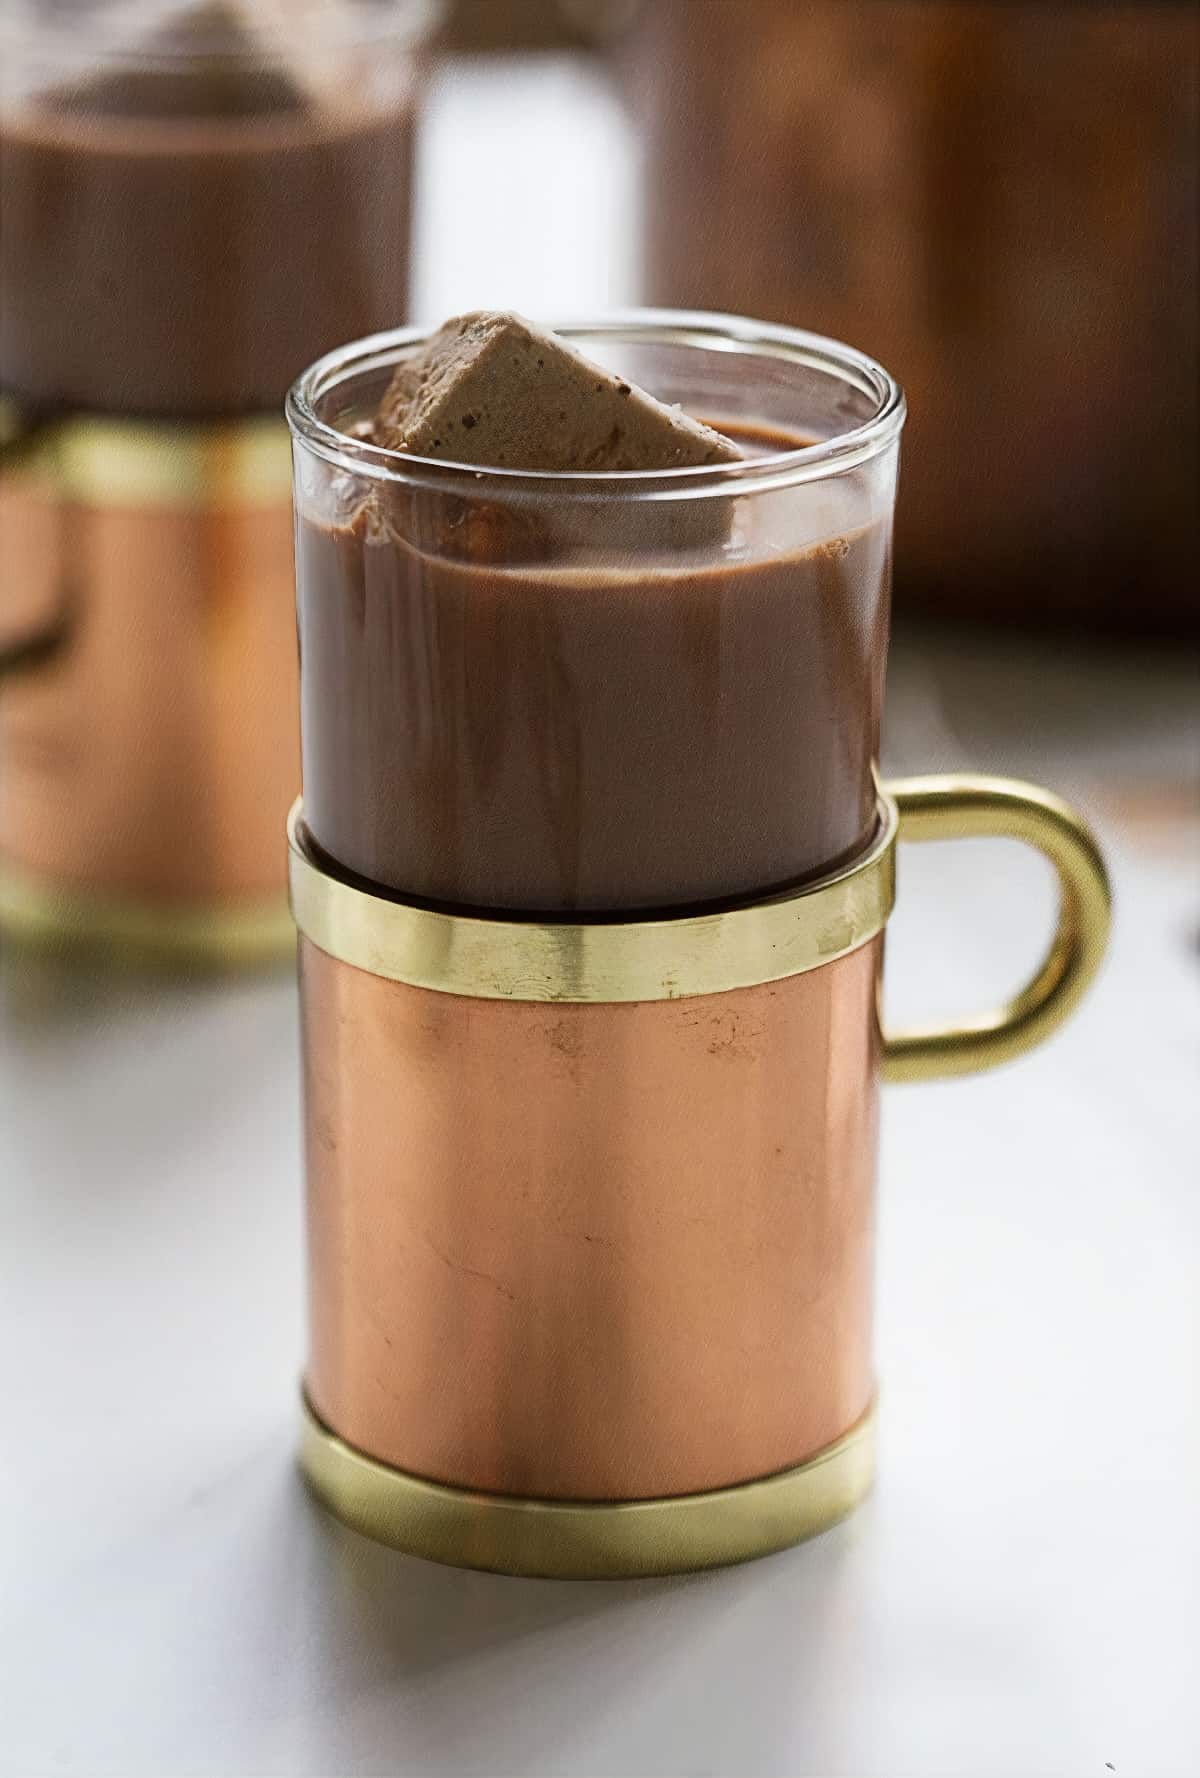 Mug of Homemade Hot Chocolate with marshmallows on top. 